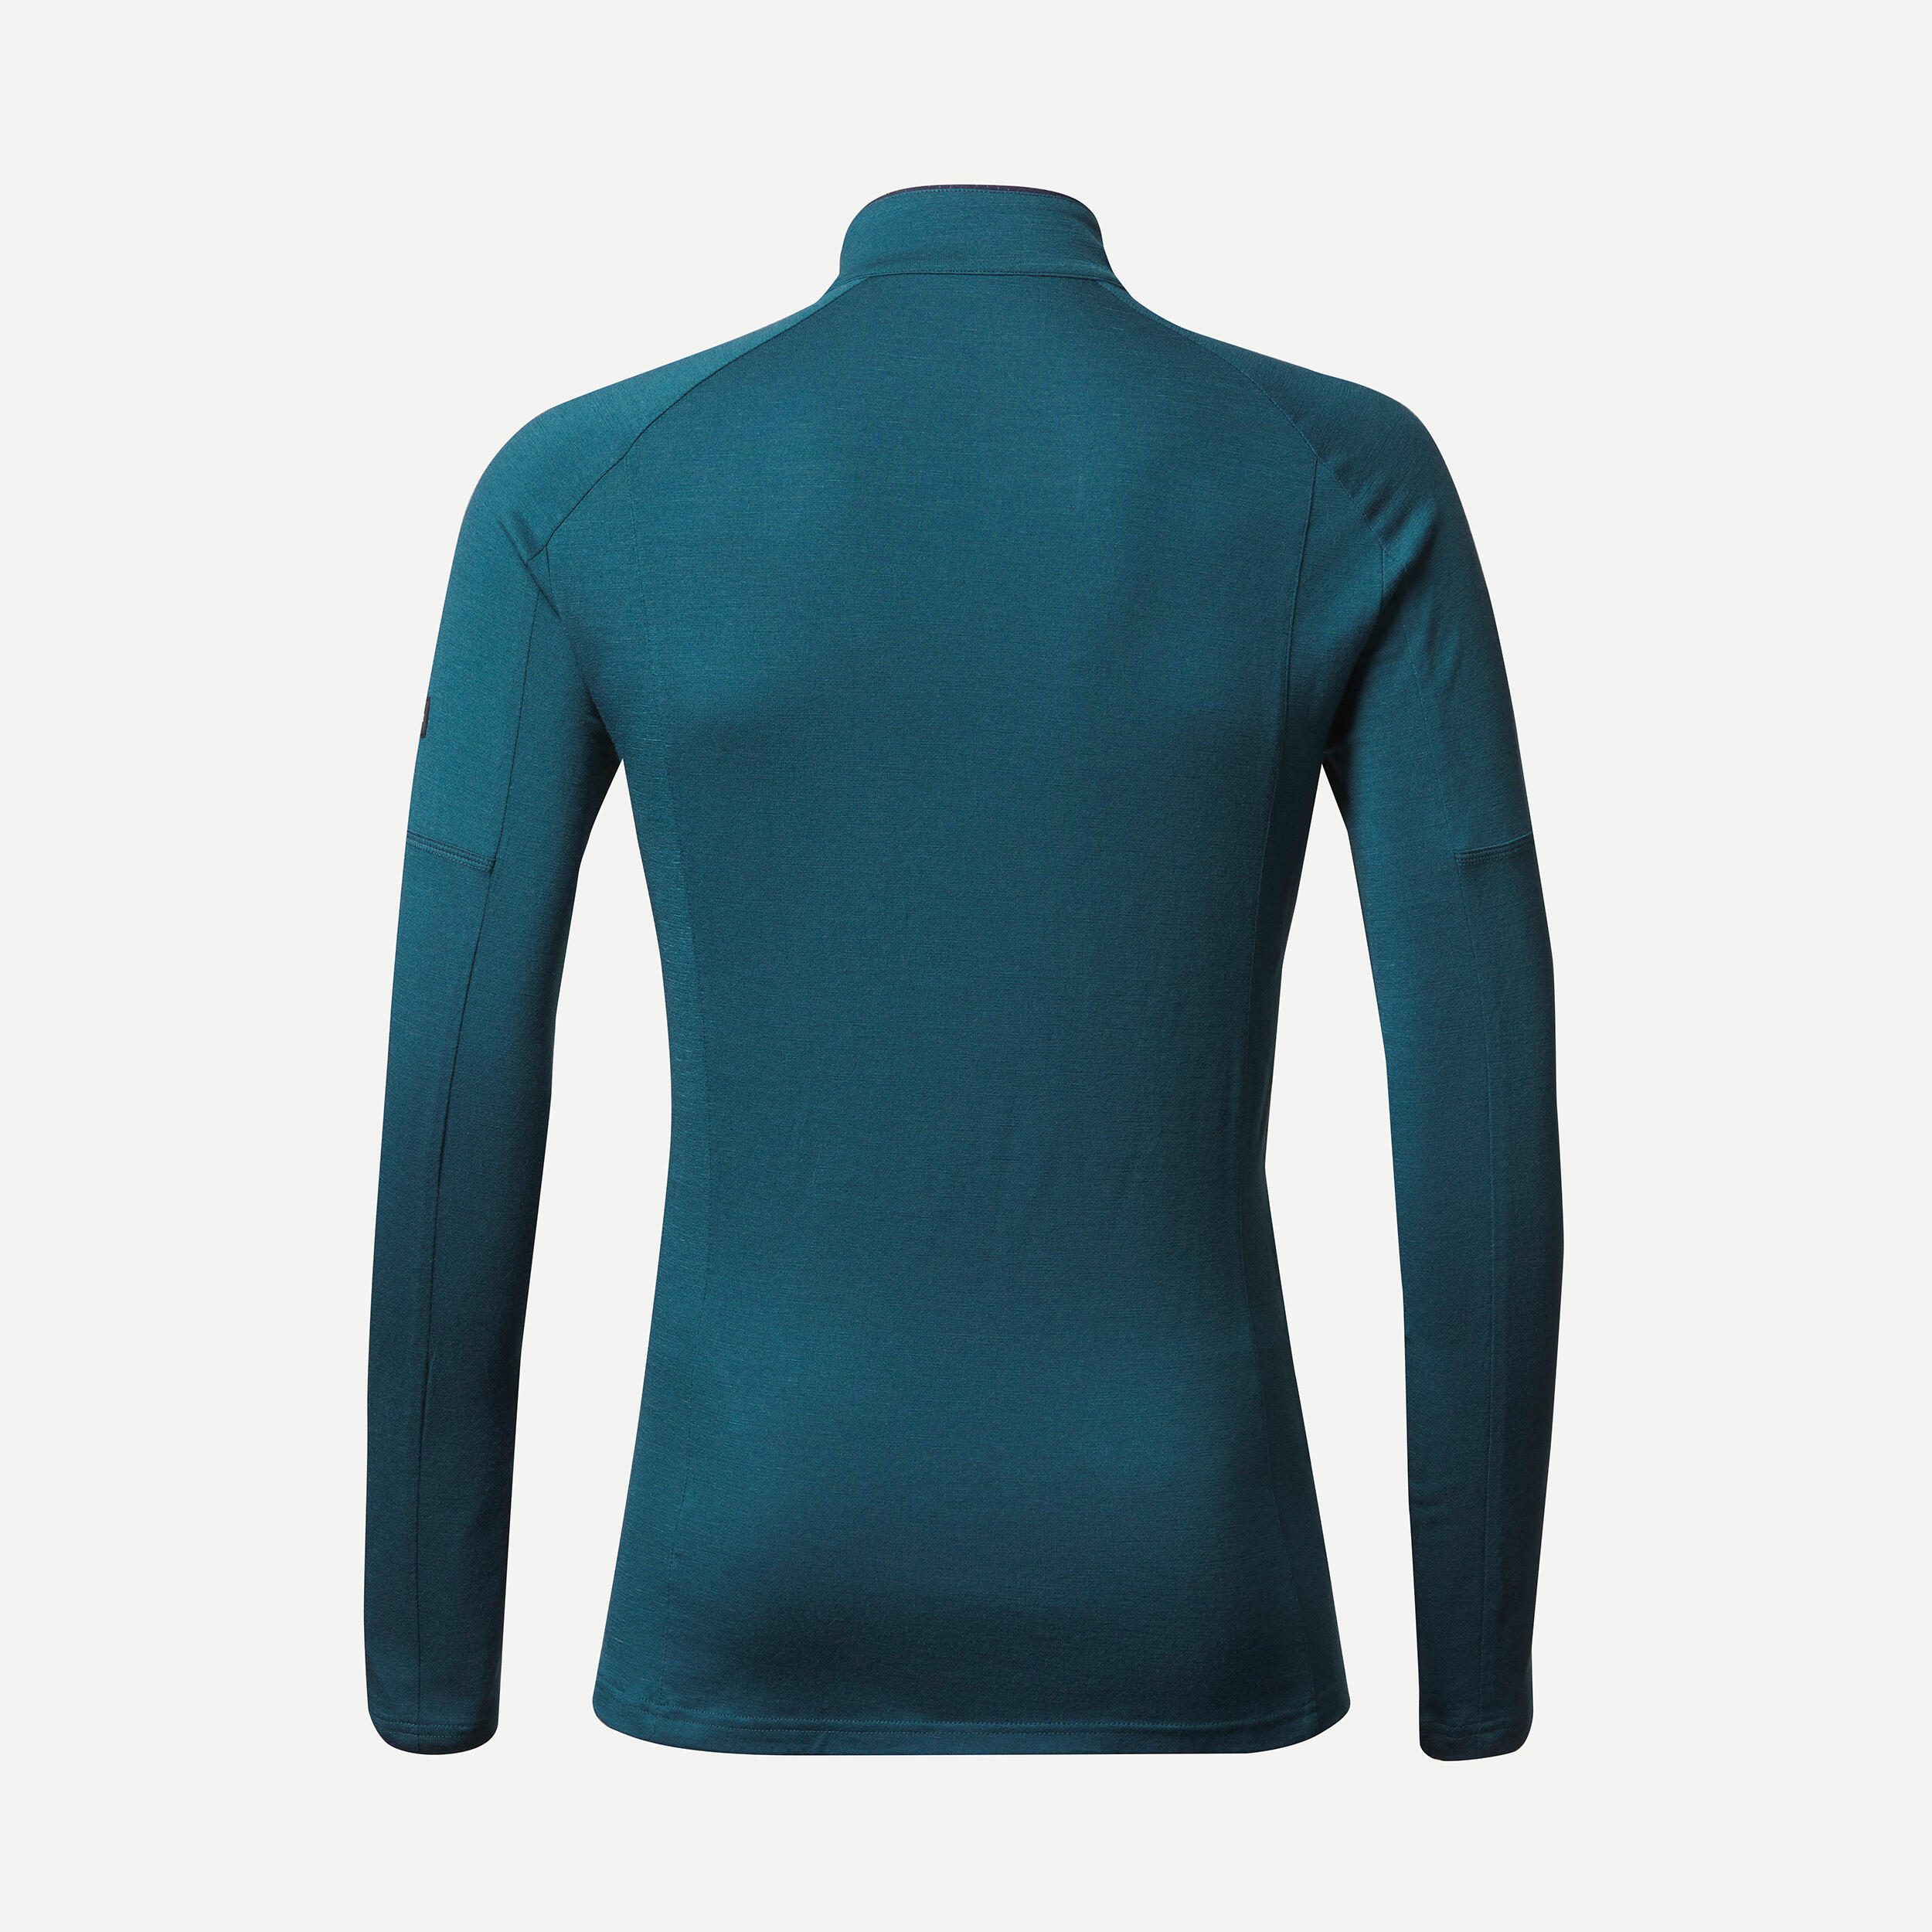 Men's Mountain Trekking Merino Wool Long-Sleeved T-Shirt with zip collar - MT500 4/7